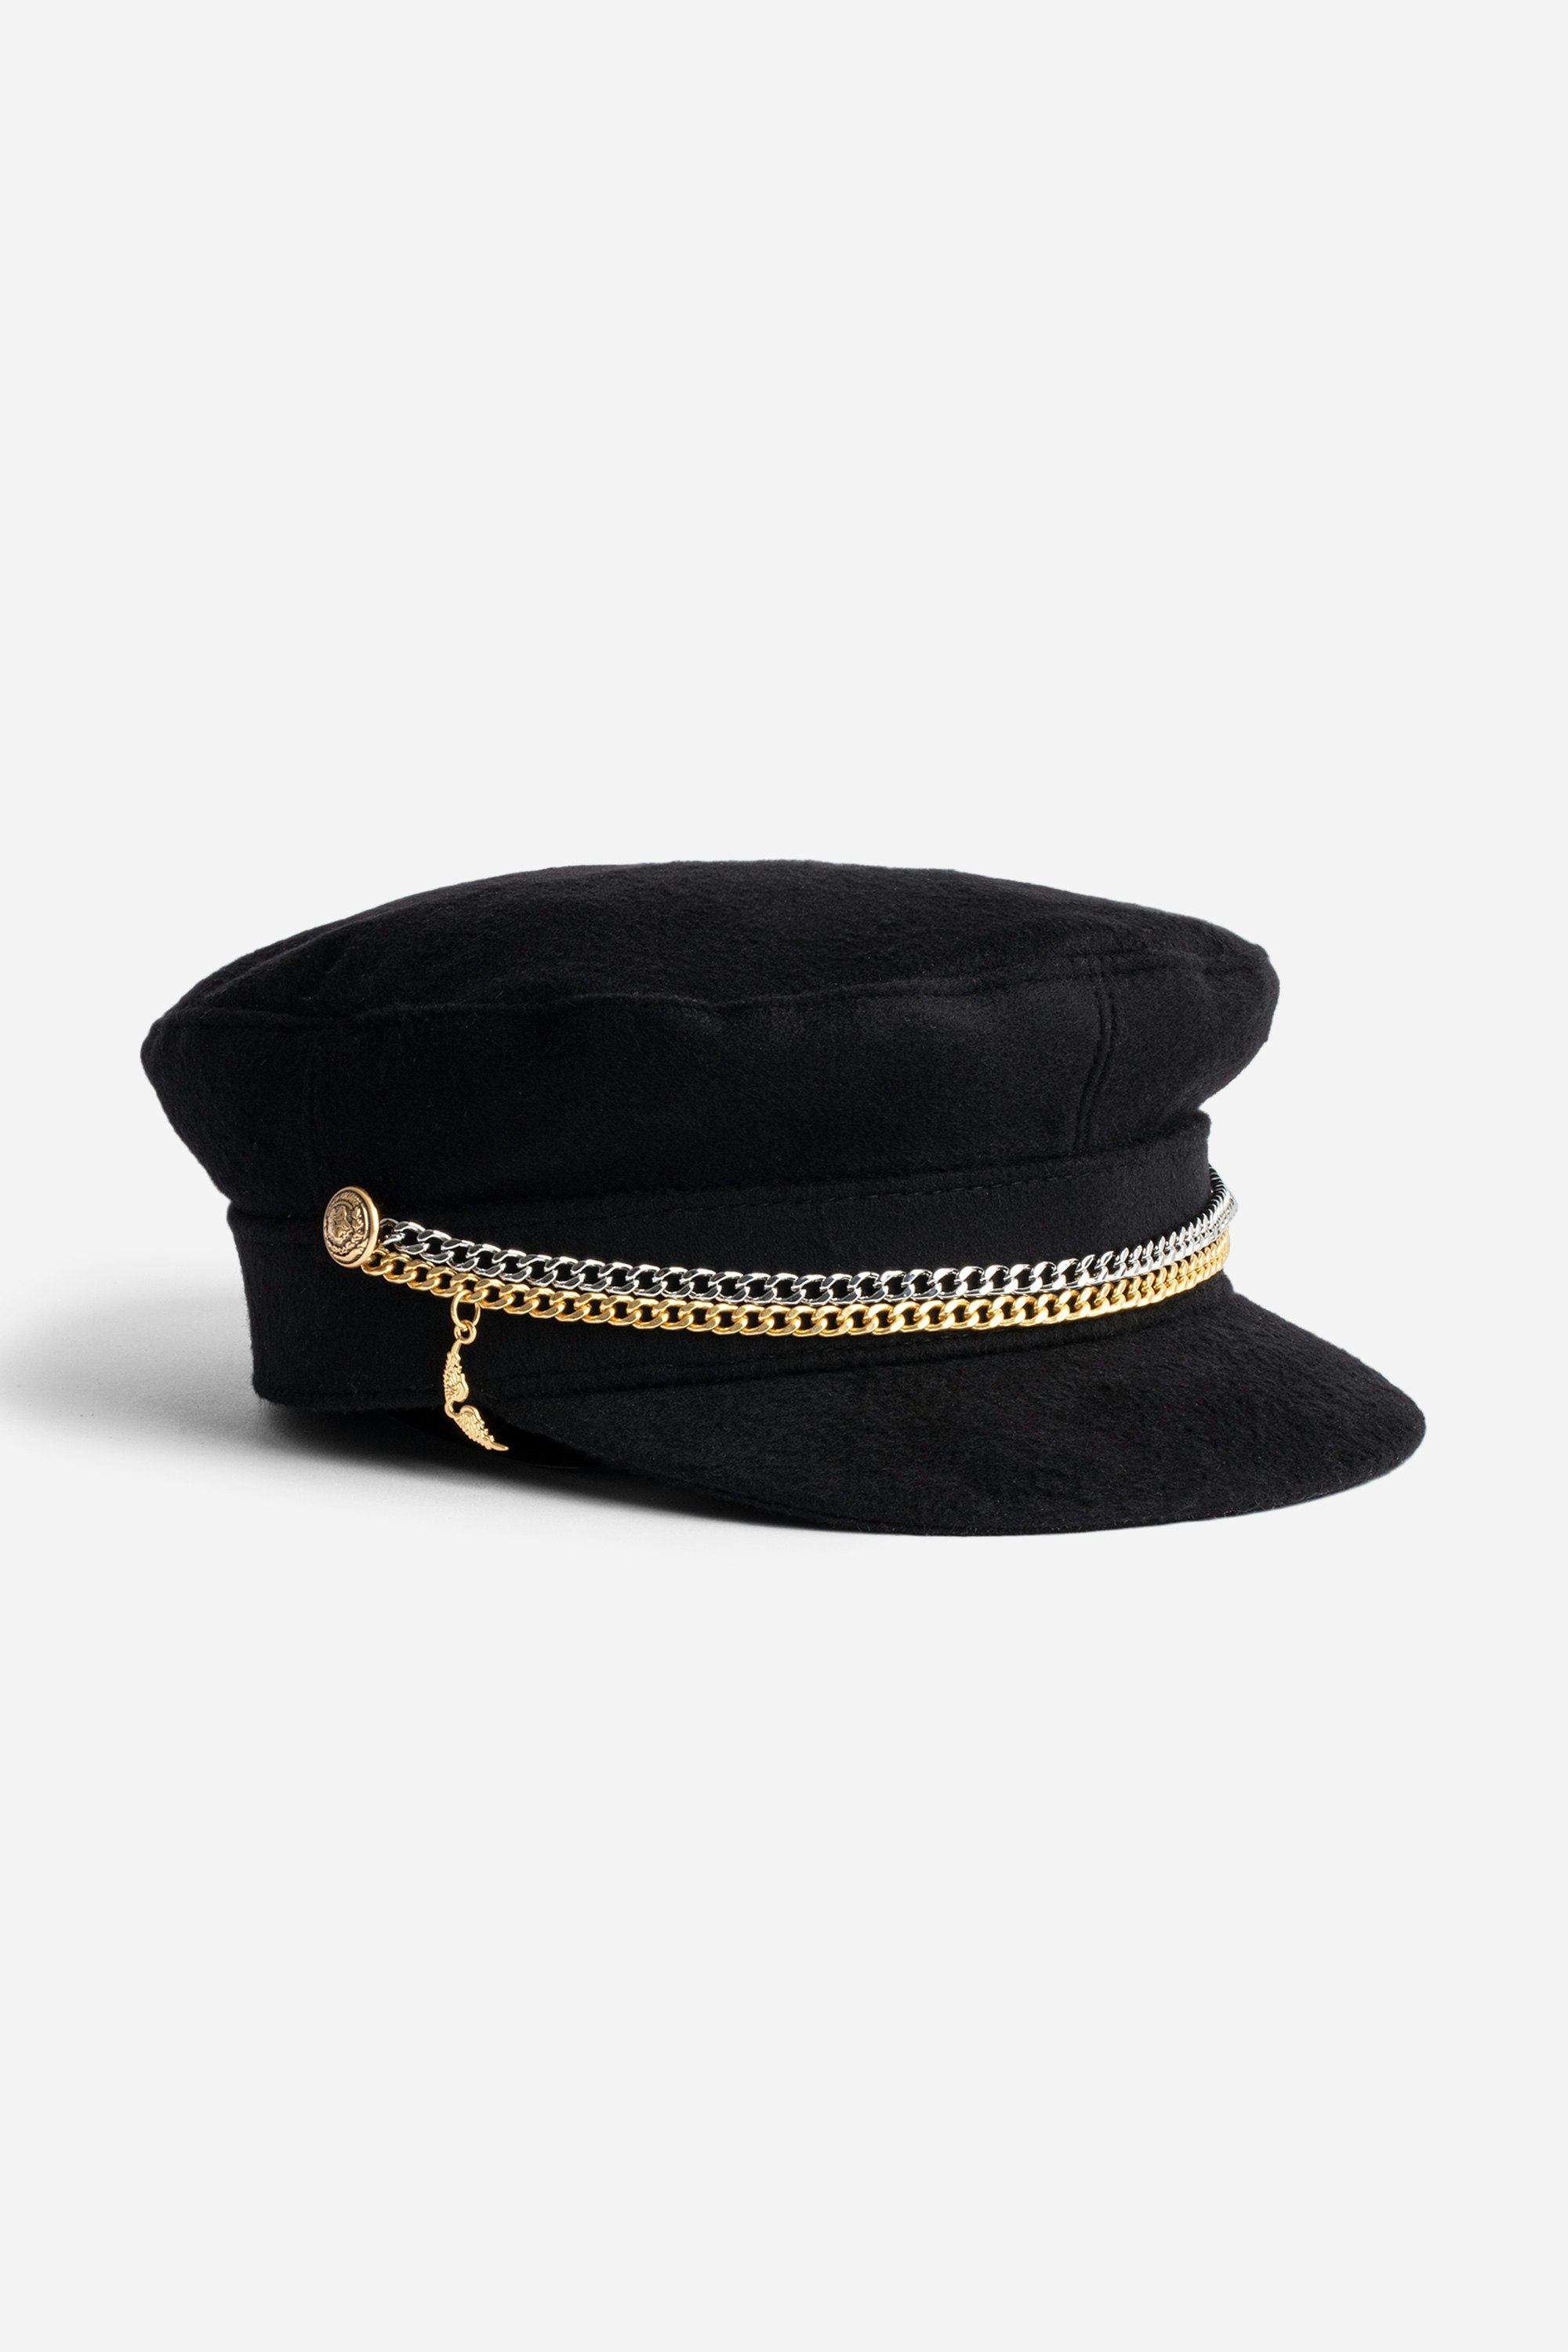 Wool Cap - Women's black wool cap with double chain.